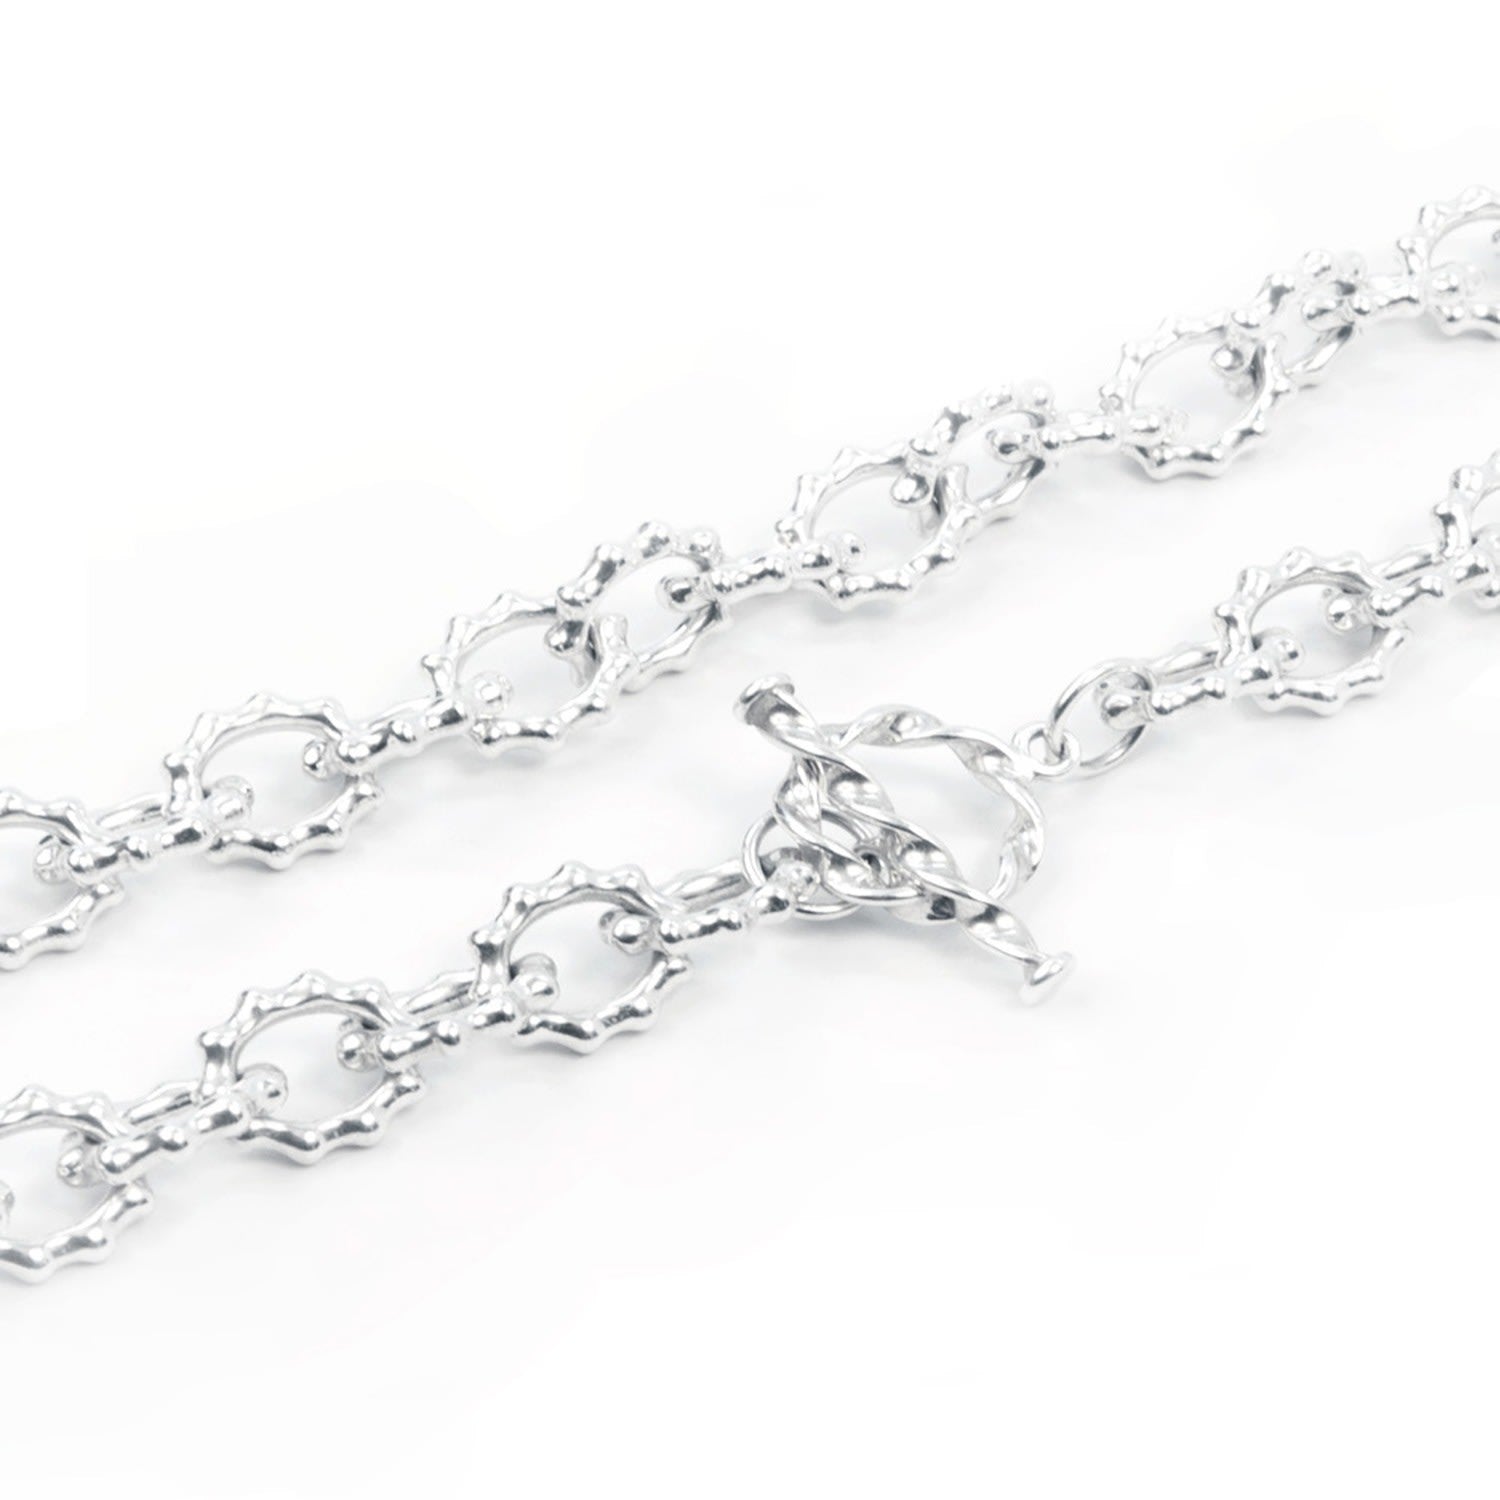 Hedgehog Handmade Chain Necklace